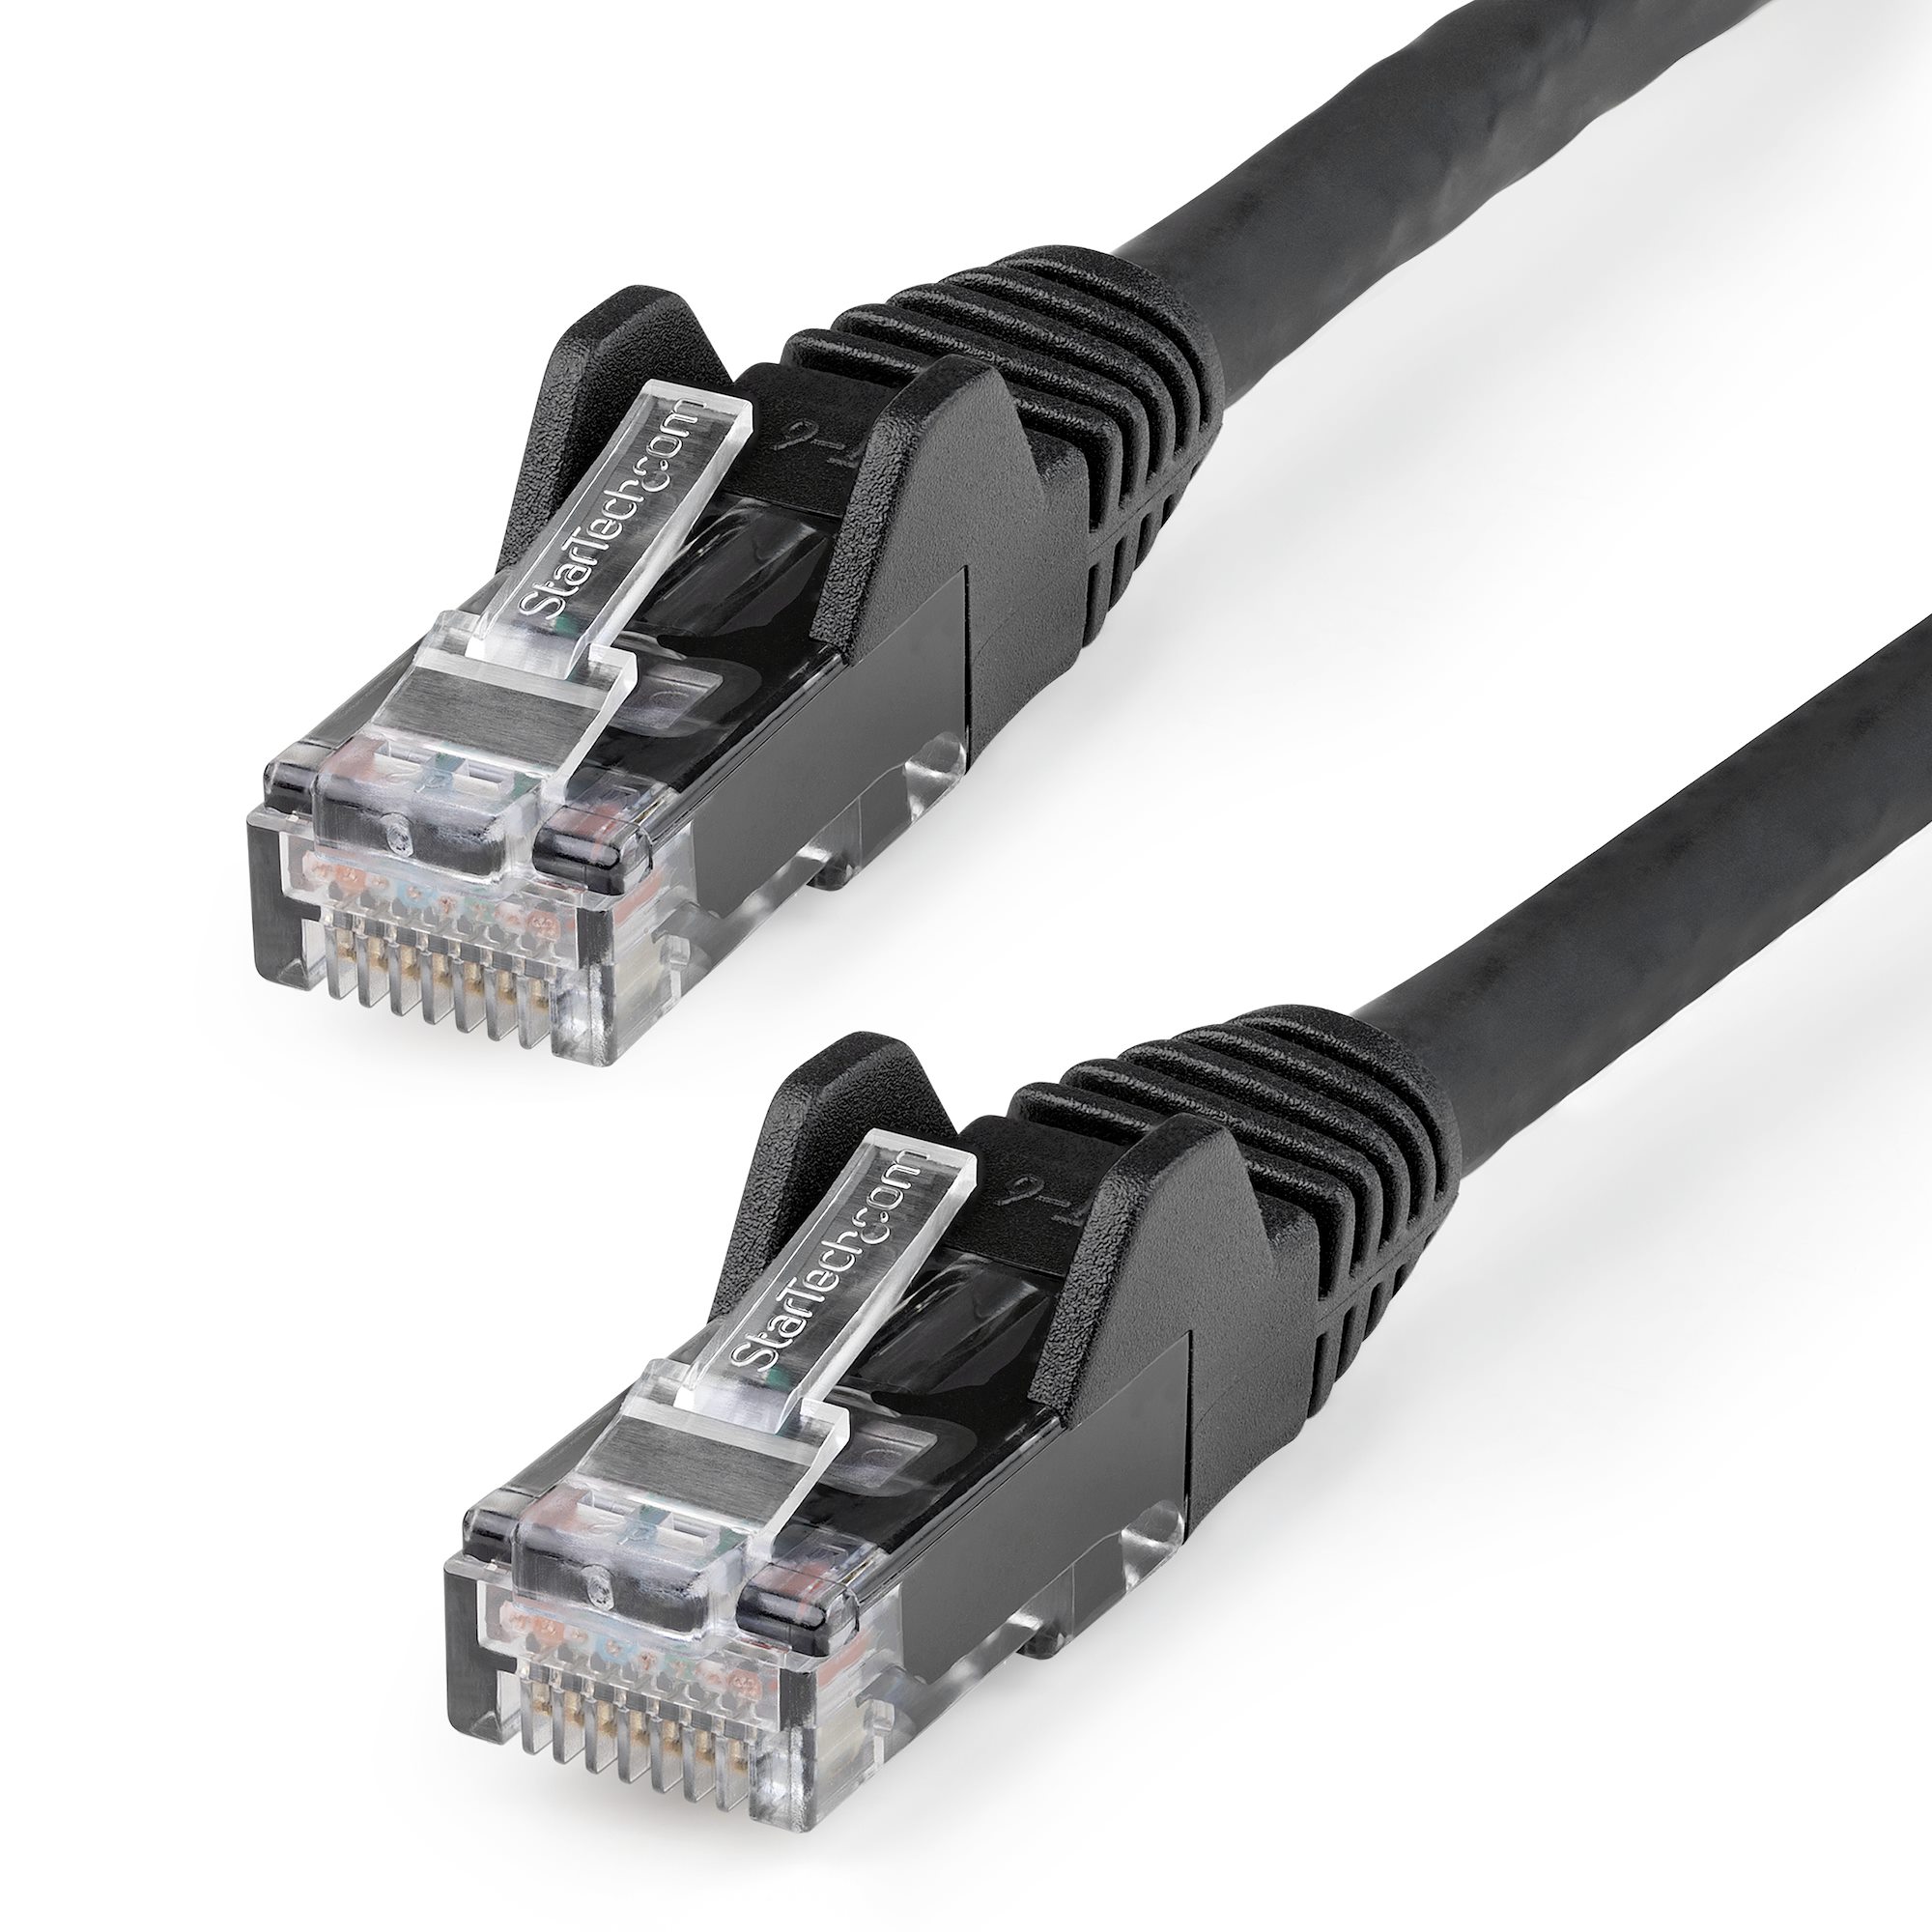 CAT6 25FT Black Gigabit Ethernet Cable Snagless Cord DSL 25 Feet 